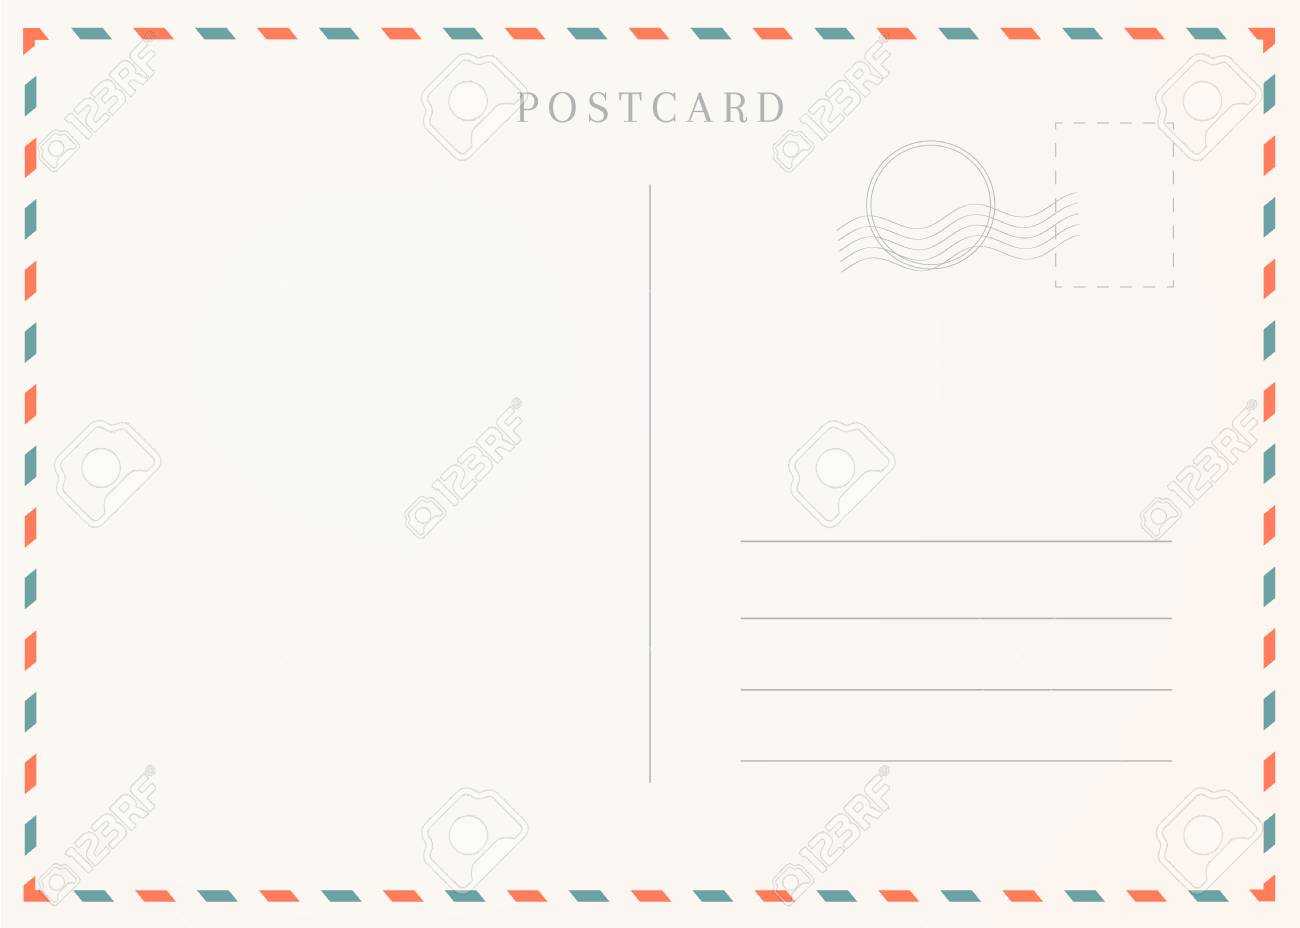 Vintage Postcard Template. Postal Card Illustration For Design. With Post Cards Template